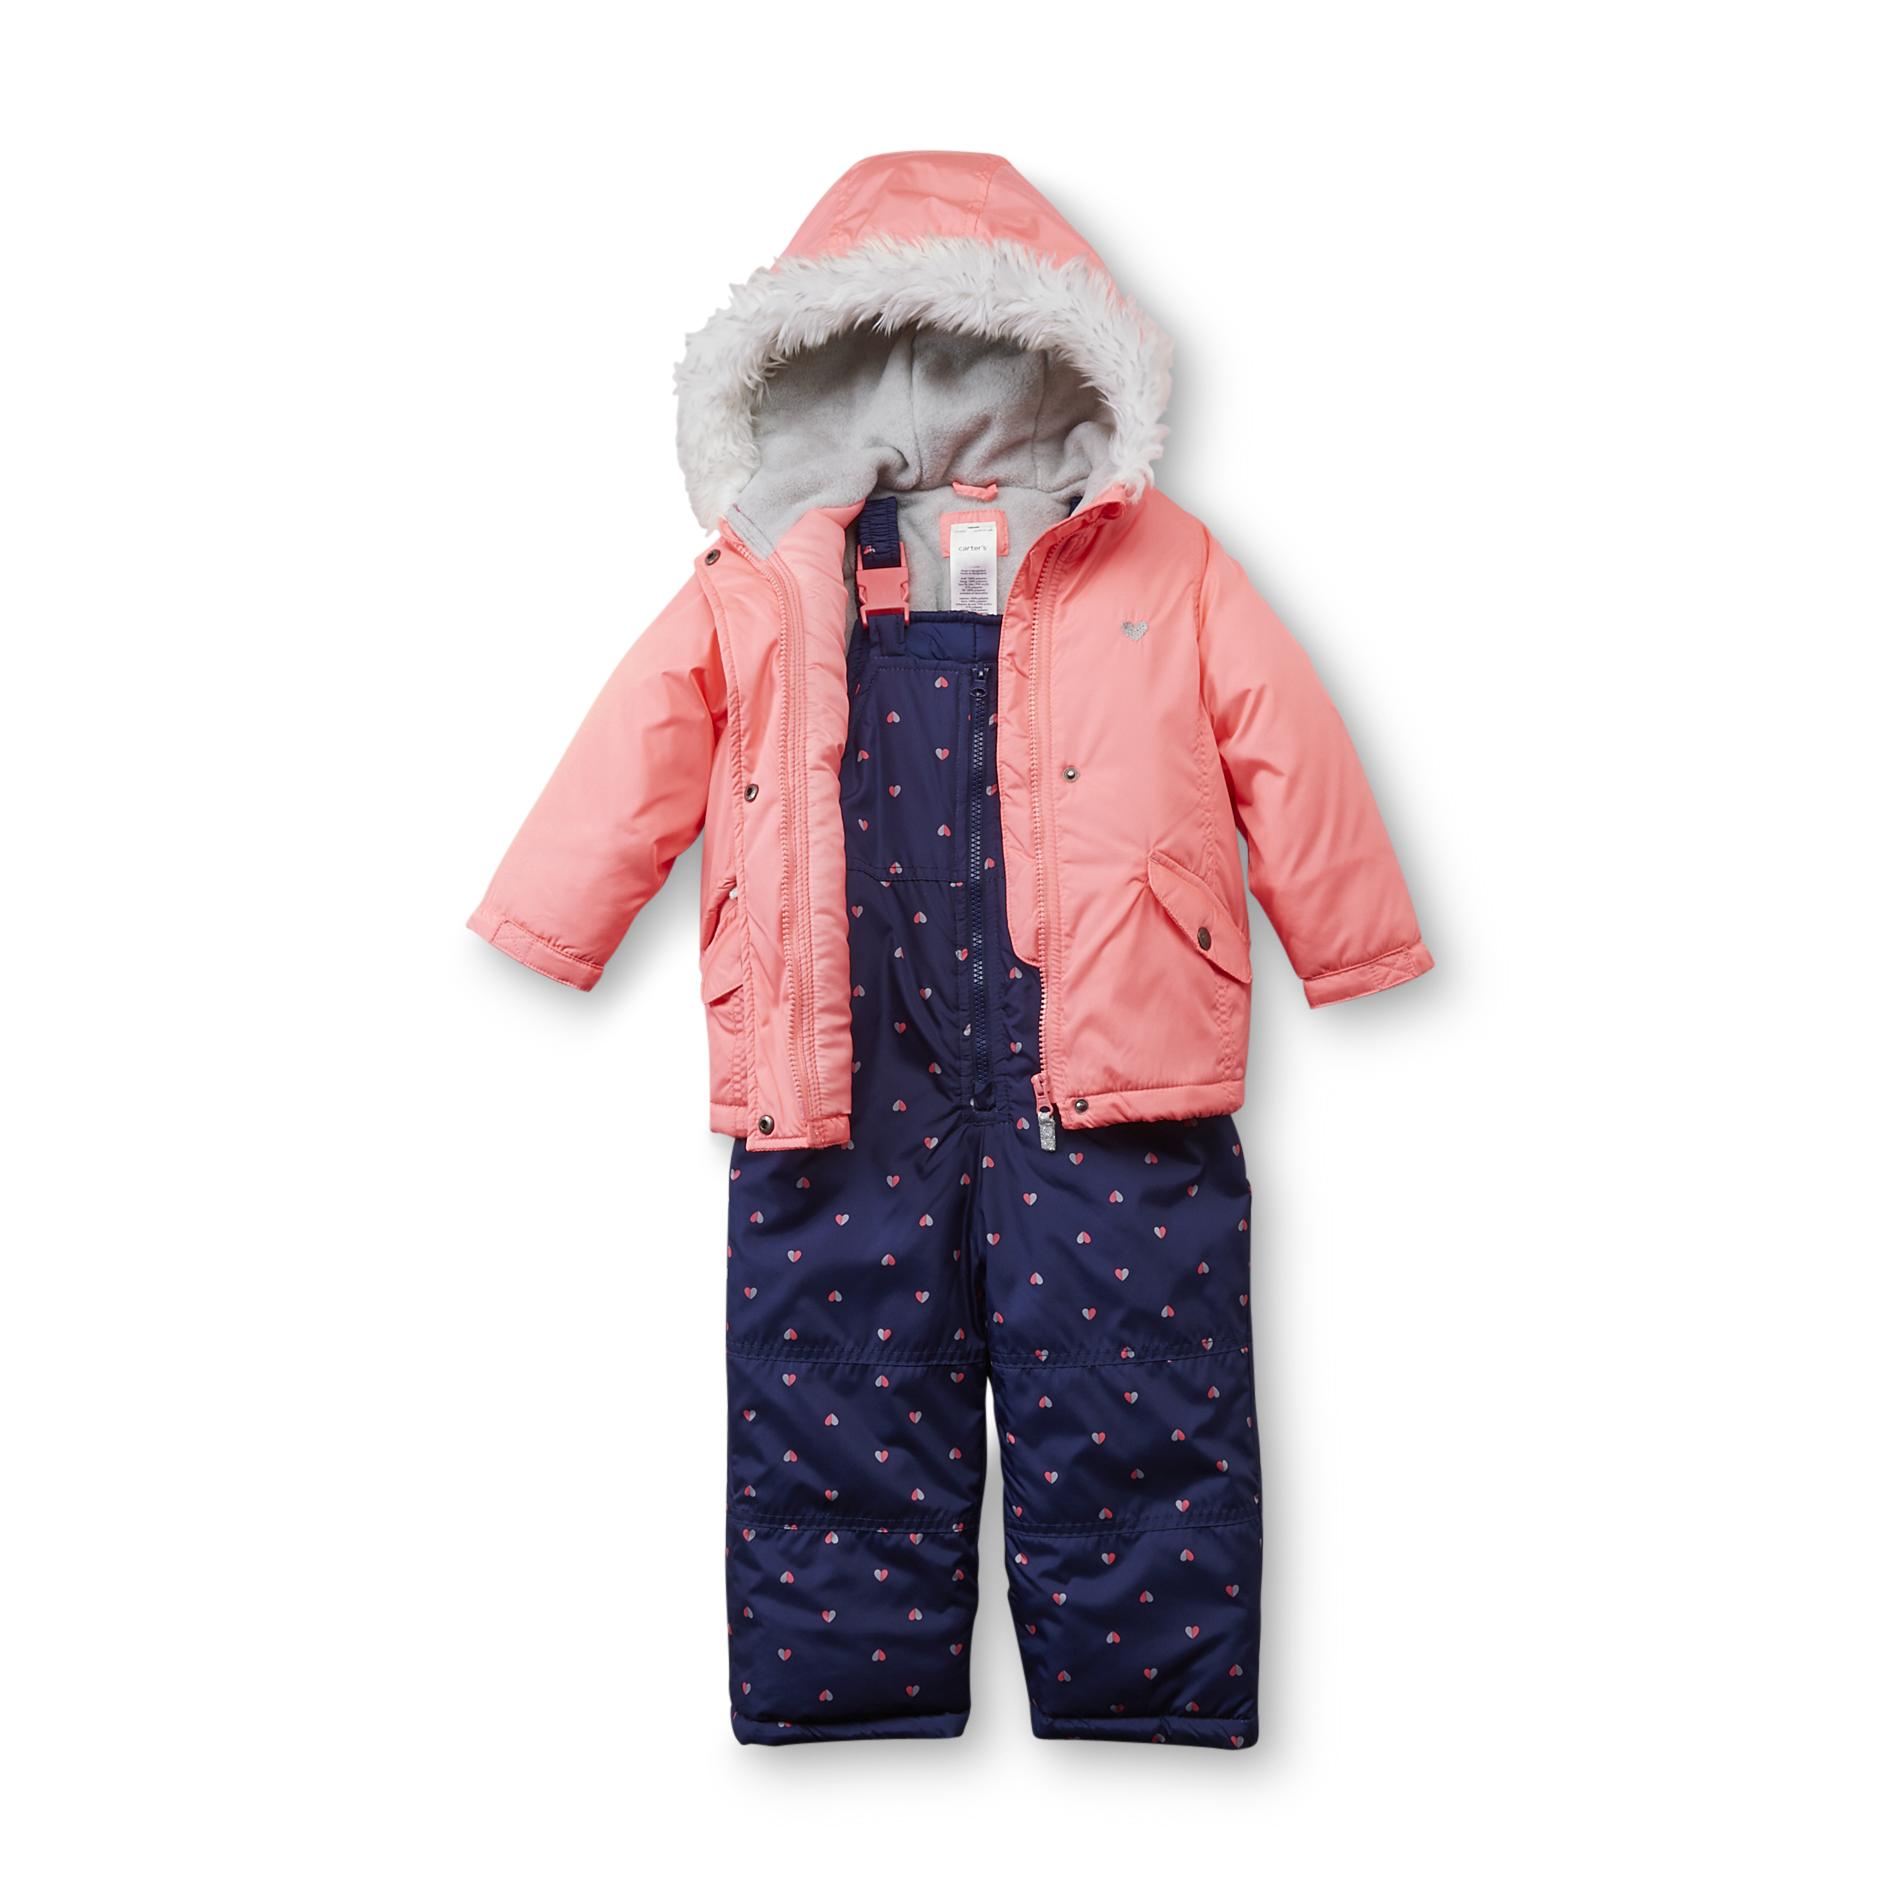 Carter's Toddler Girl's Winter Jacket & Snow Pants - Hearts